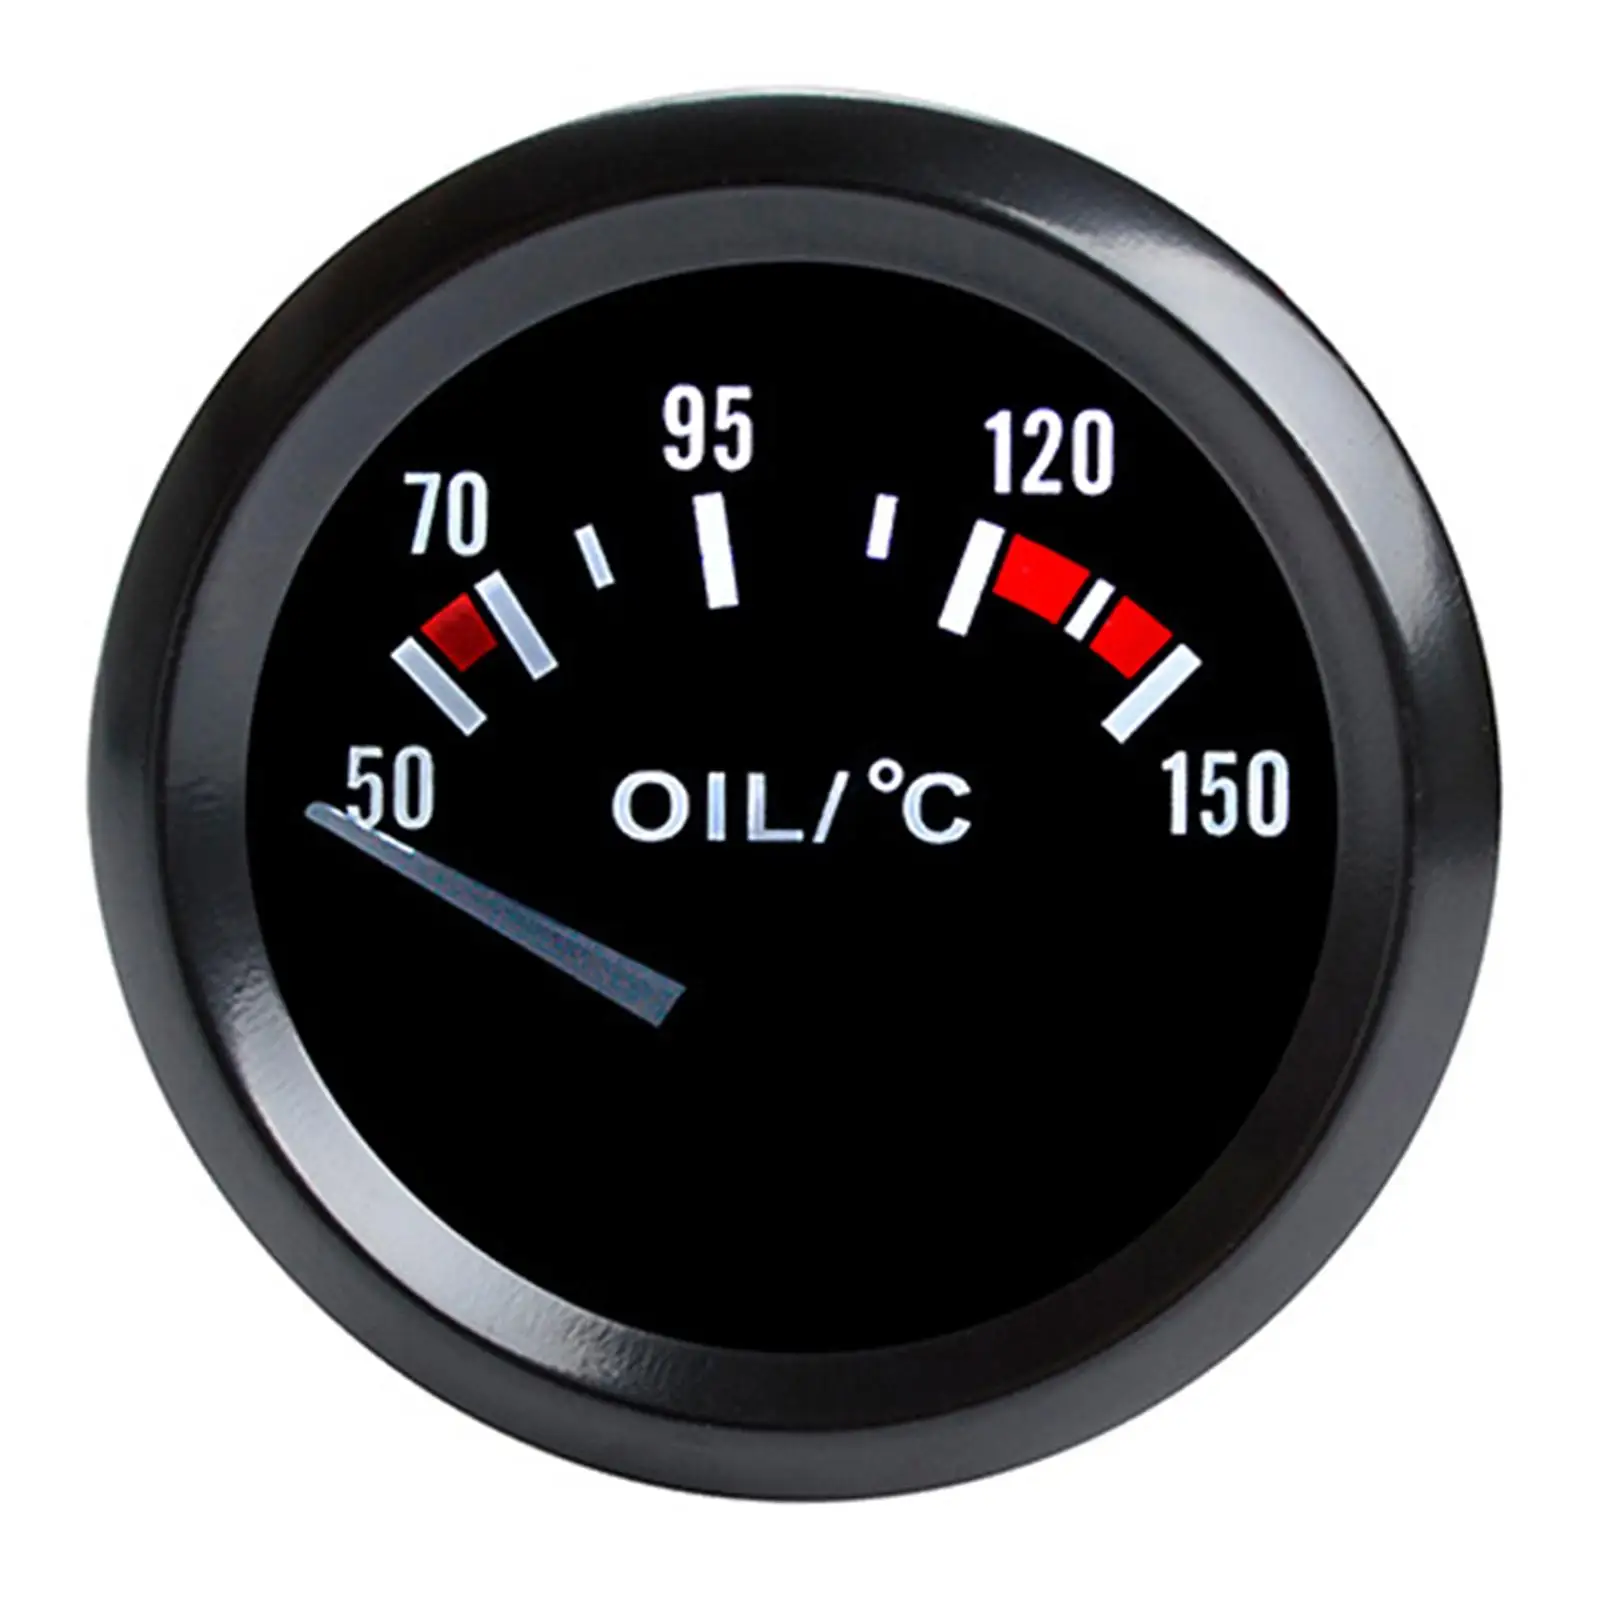 Oil Temp Gauge Car Accessories High Performance 2 inch Car Oil Temp Gauge Meter Oil Temperature Gauge for Automotive Truck